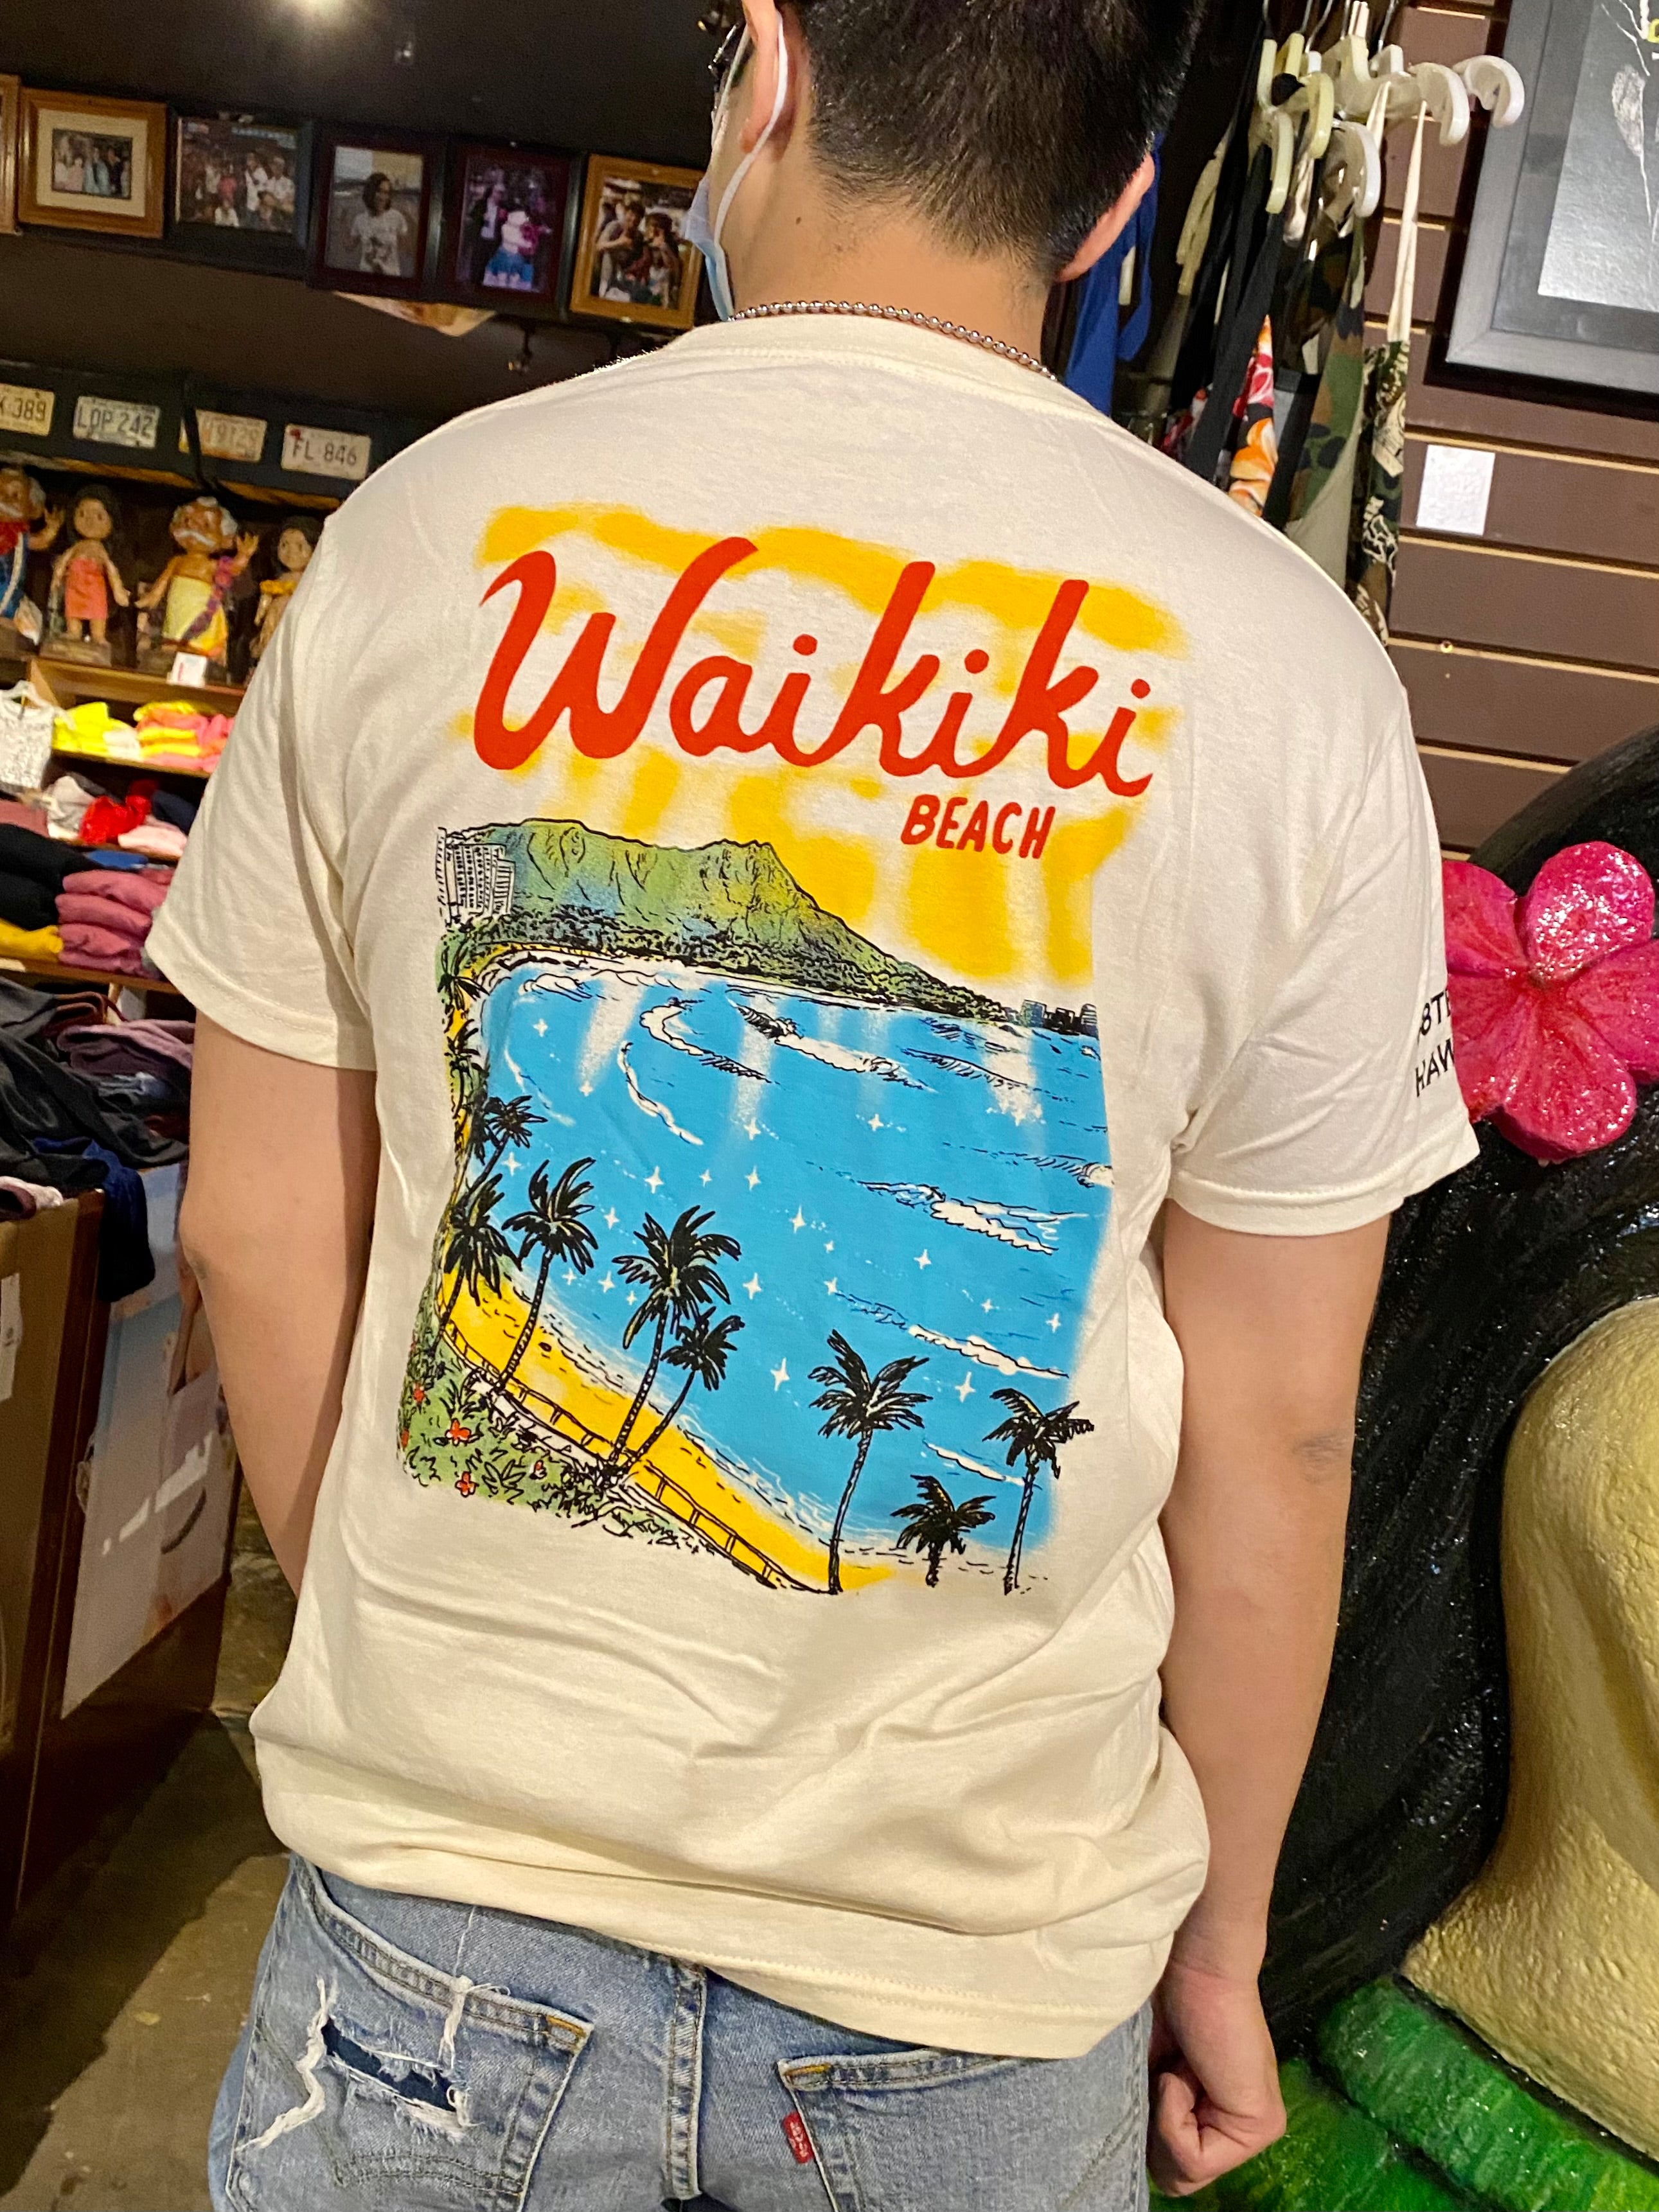 Waikiki Beach Tee x 88Tees by Drew Toonz – 88 Tees - Honolulu, Hawaii